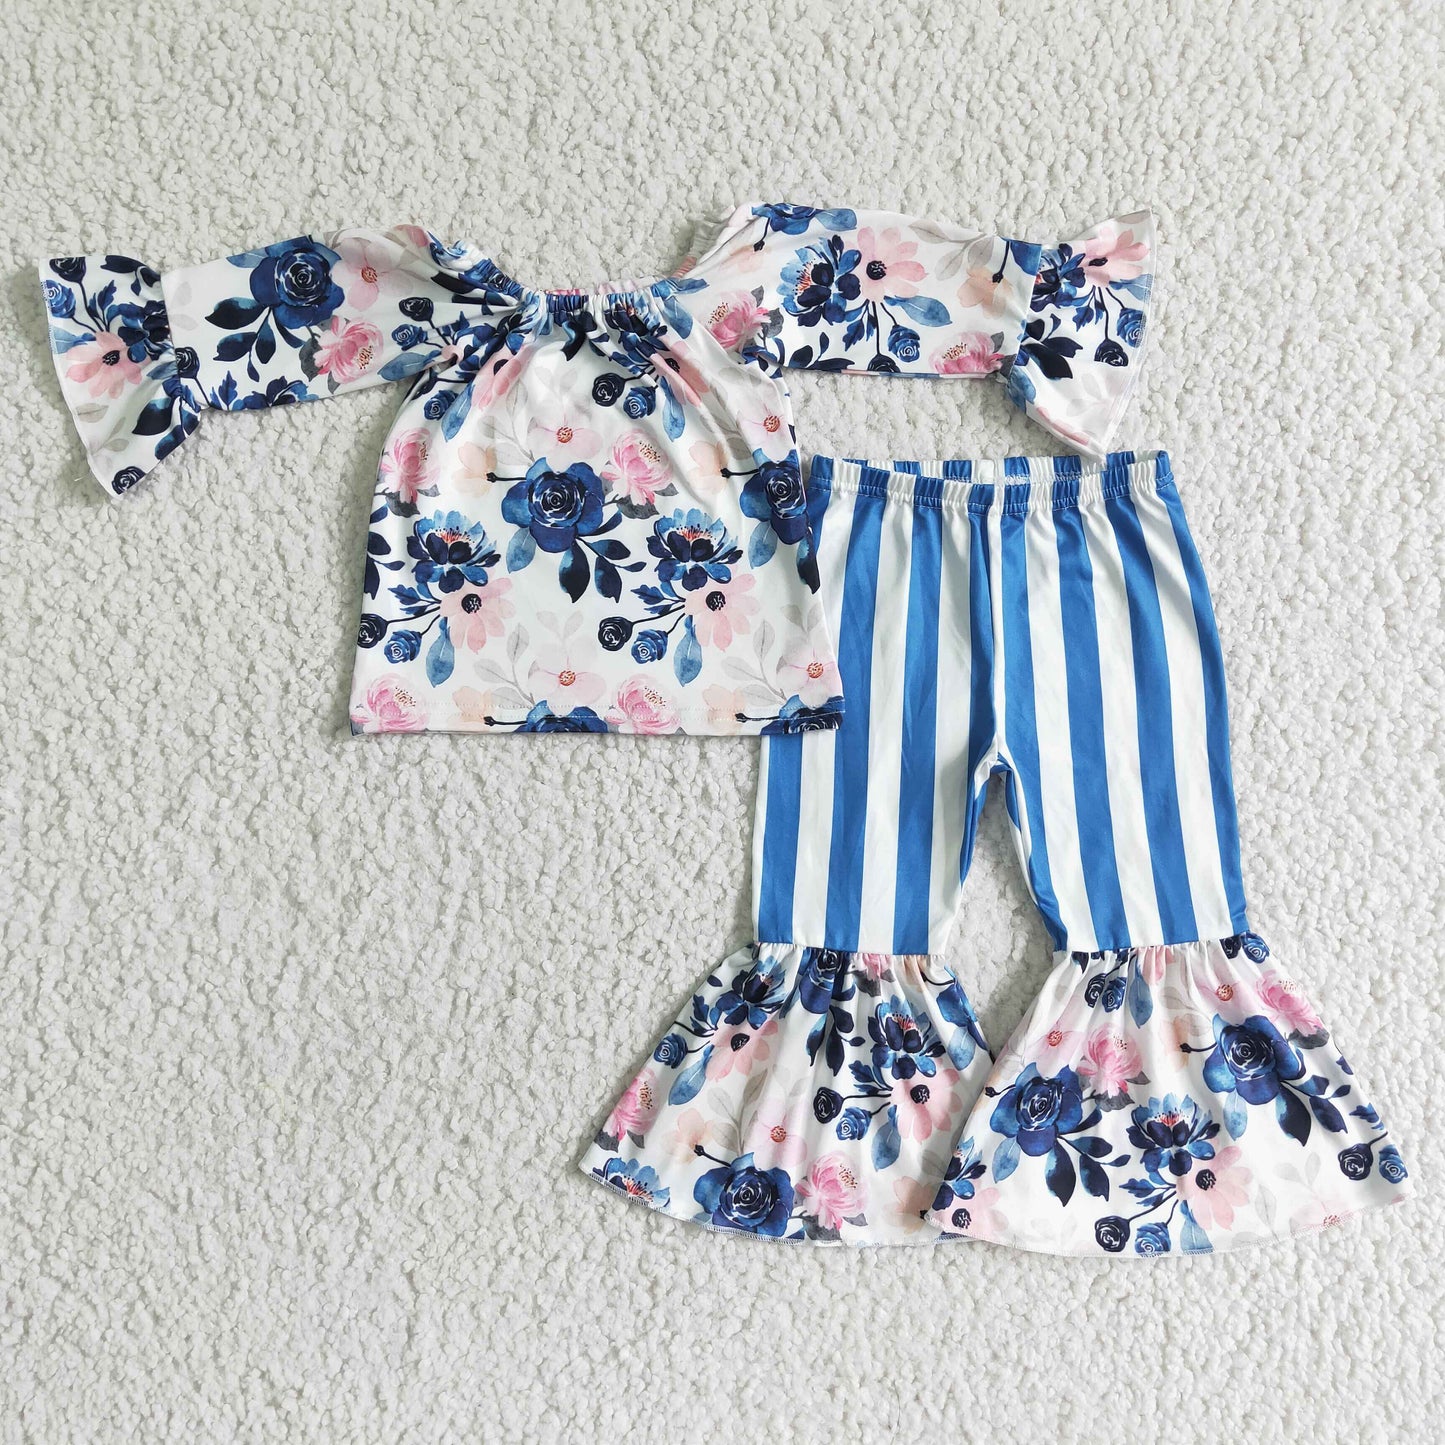 Blue floral top stripe pants girls clothing set